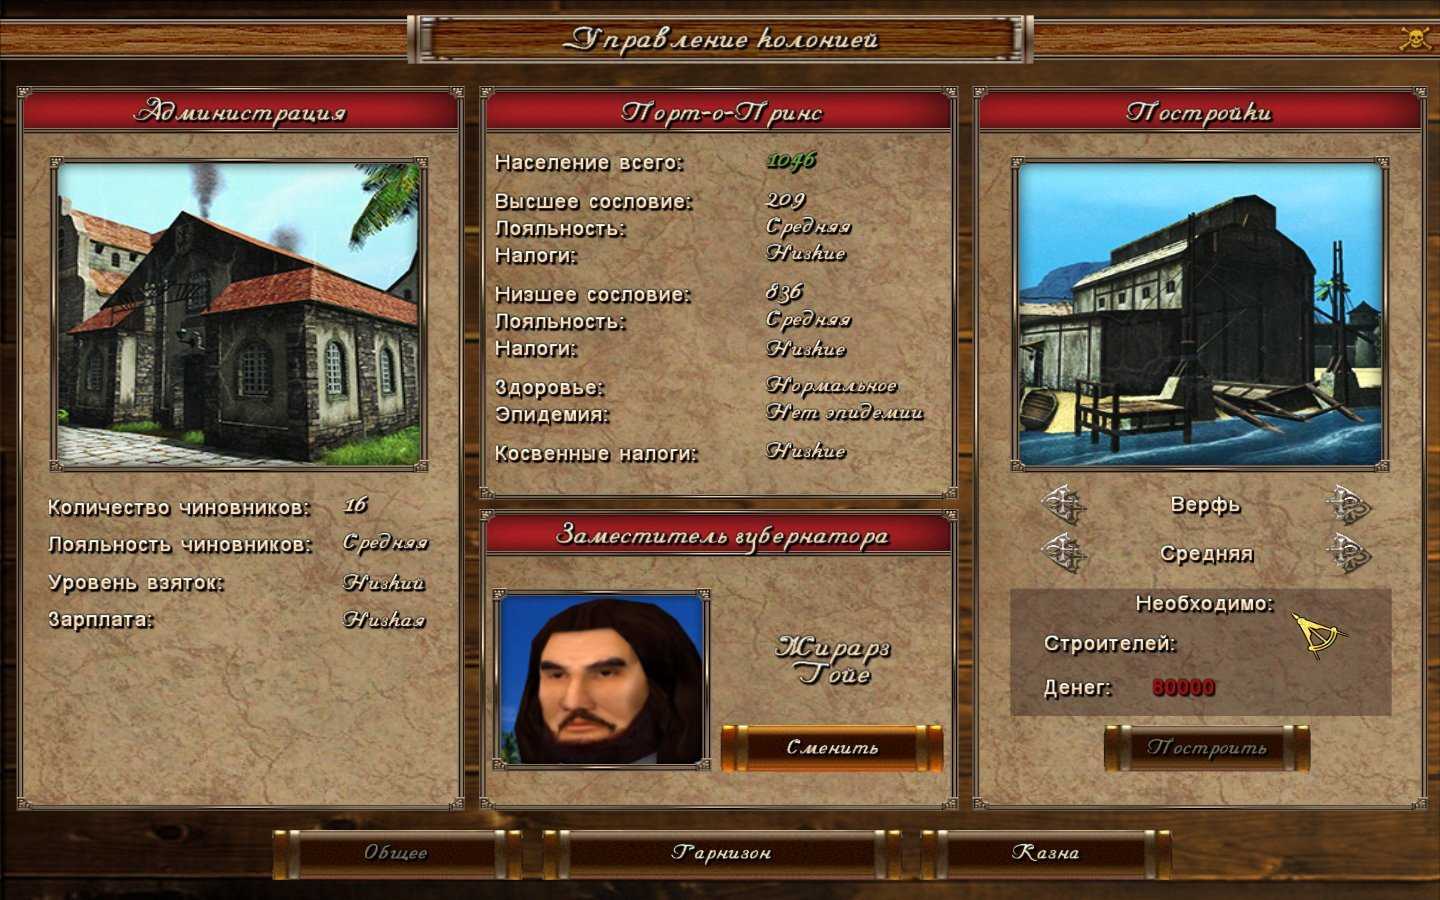 Pirates treasure hunters game review - mmos.com